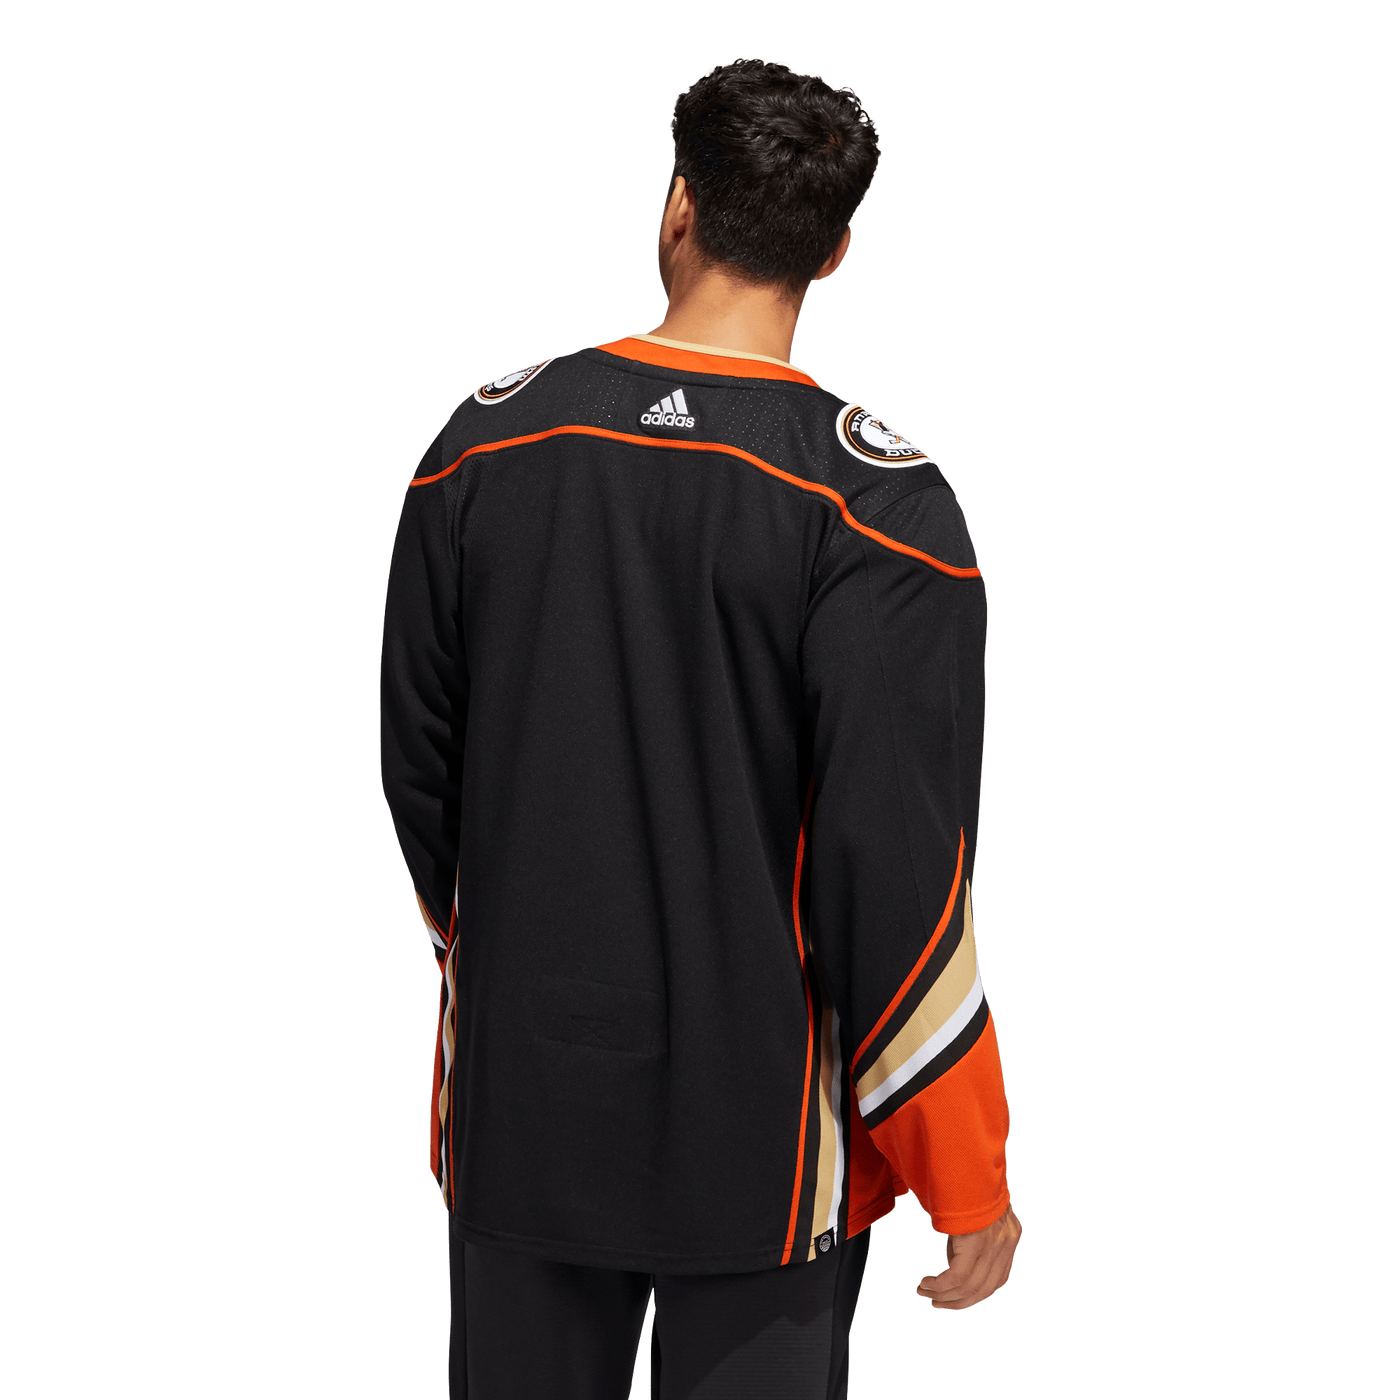 Anaheim Ducks Home Adidas PrimeGreen Senior Jersey